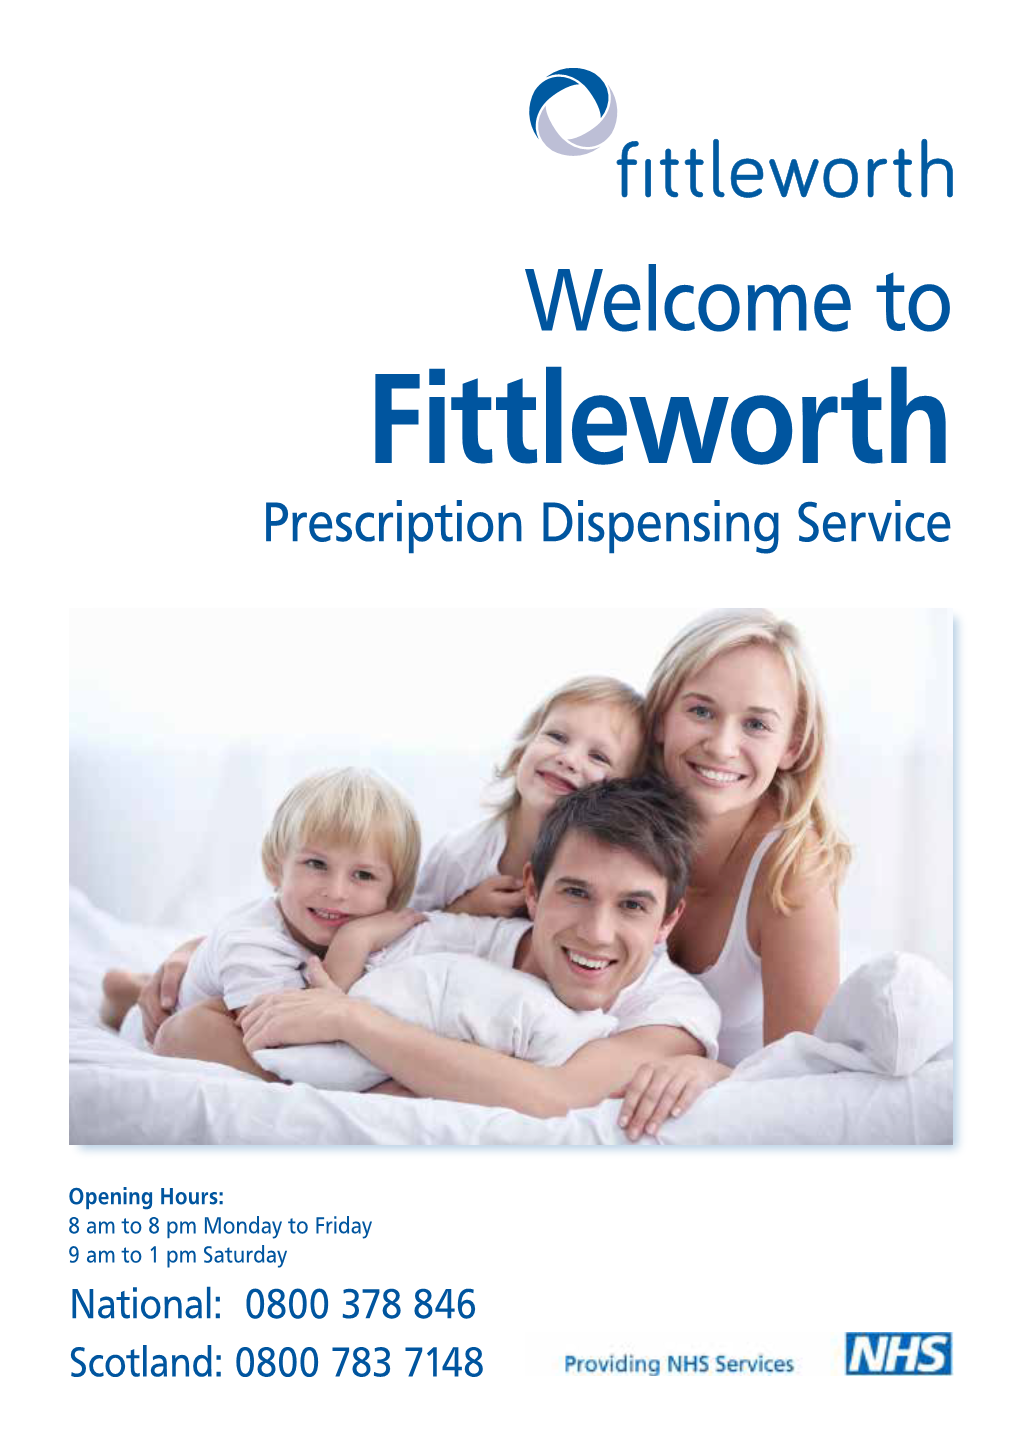 Fittleworth Prescription Dispensing Service